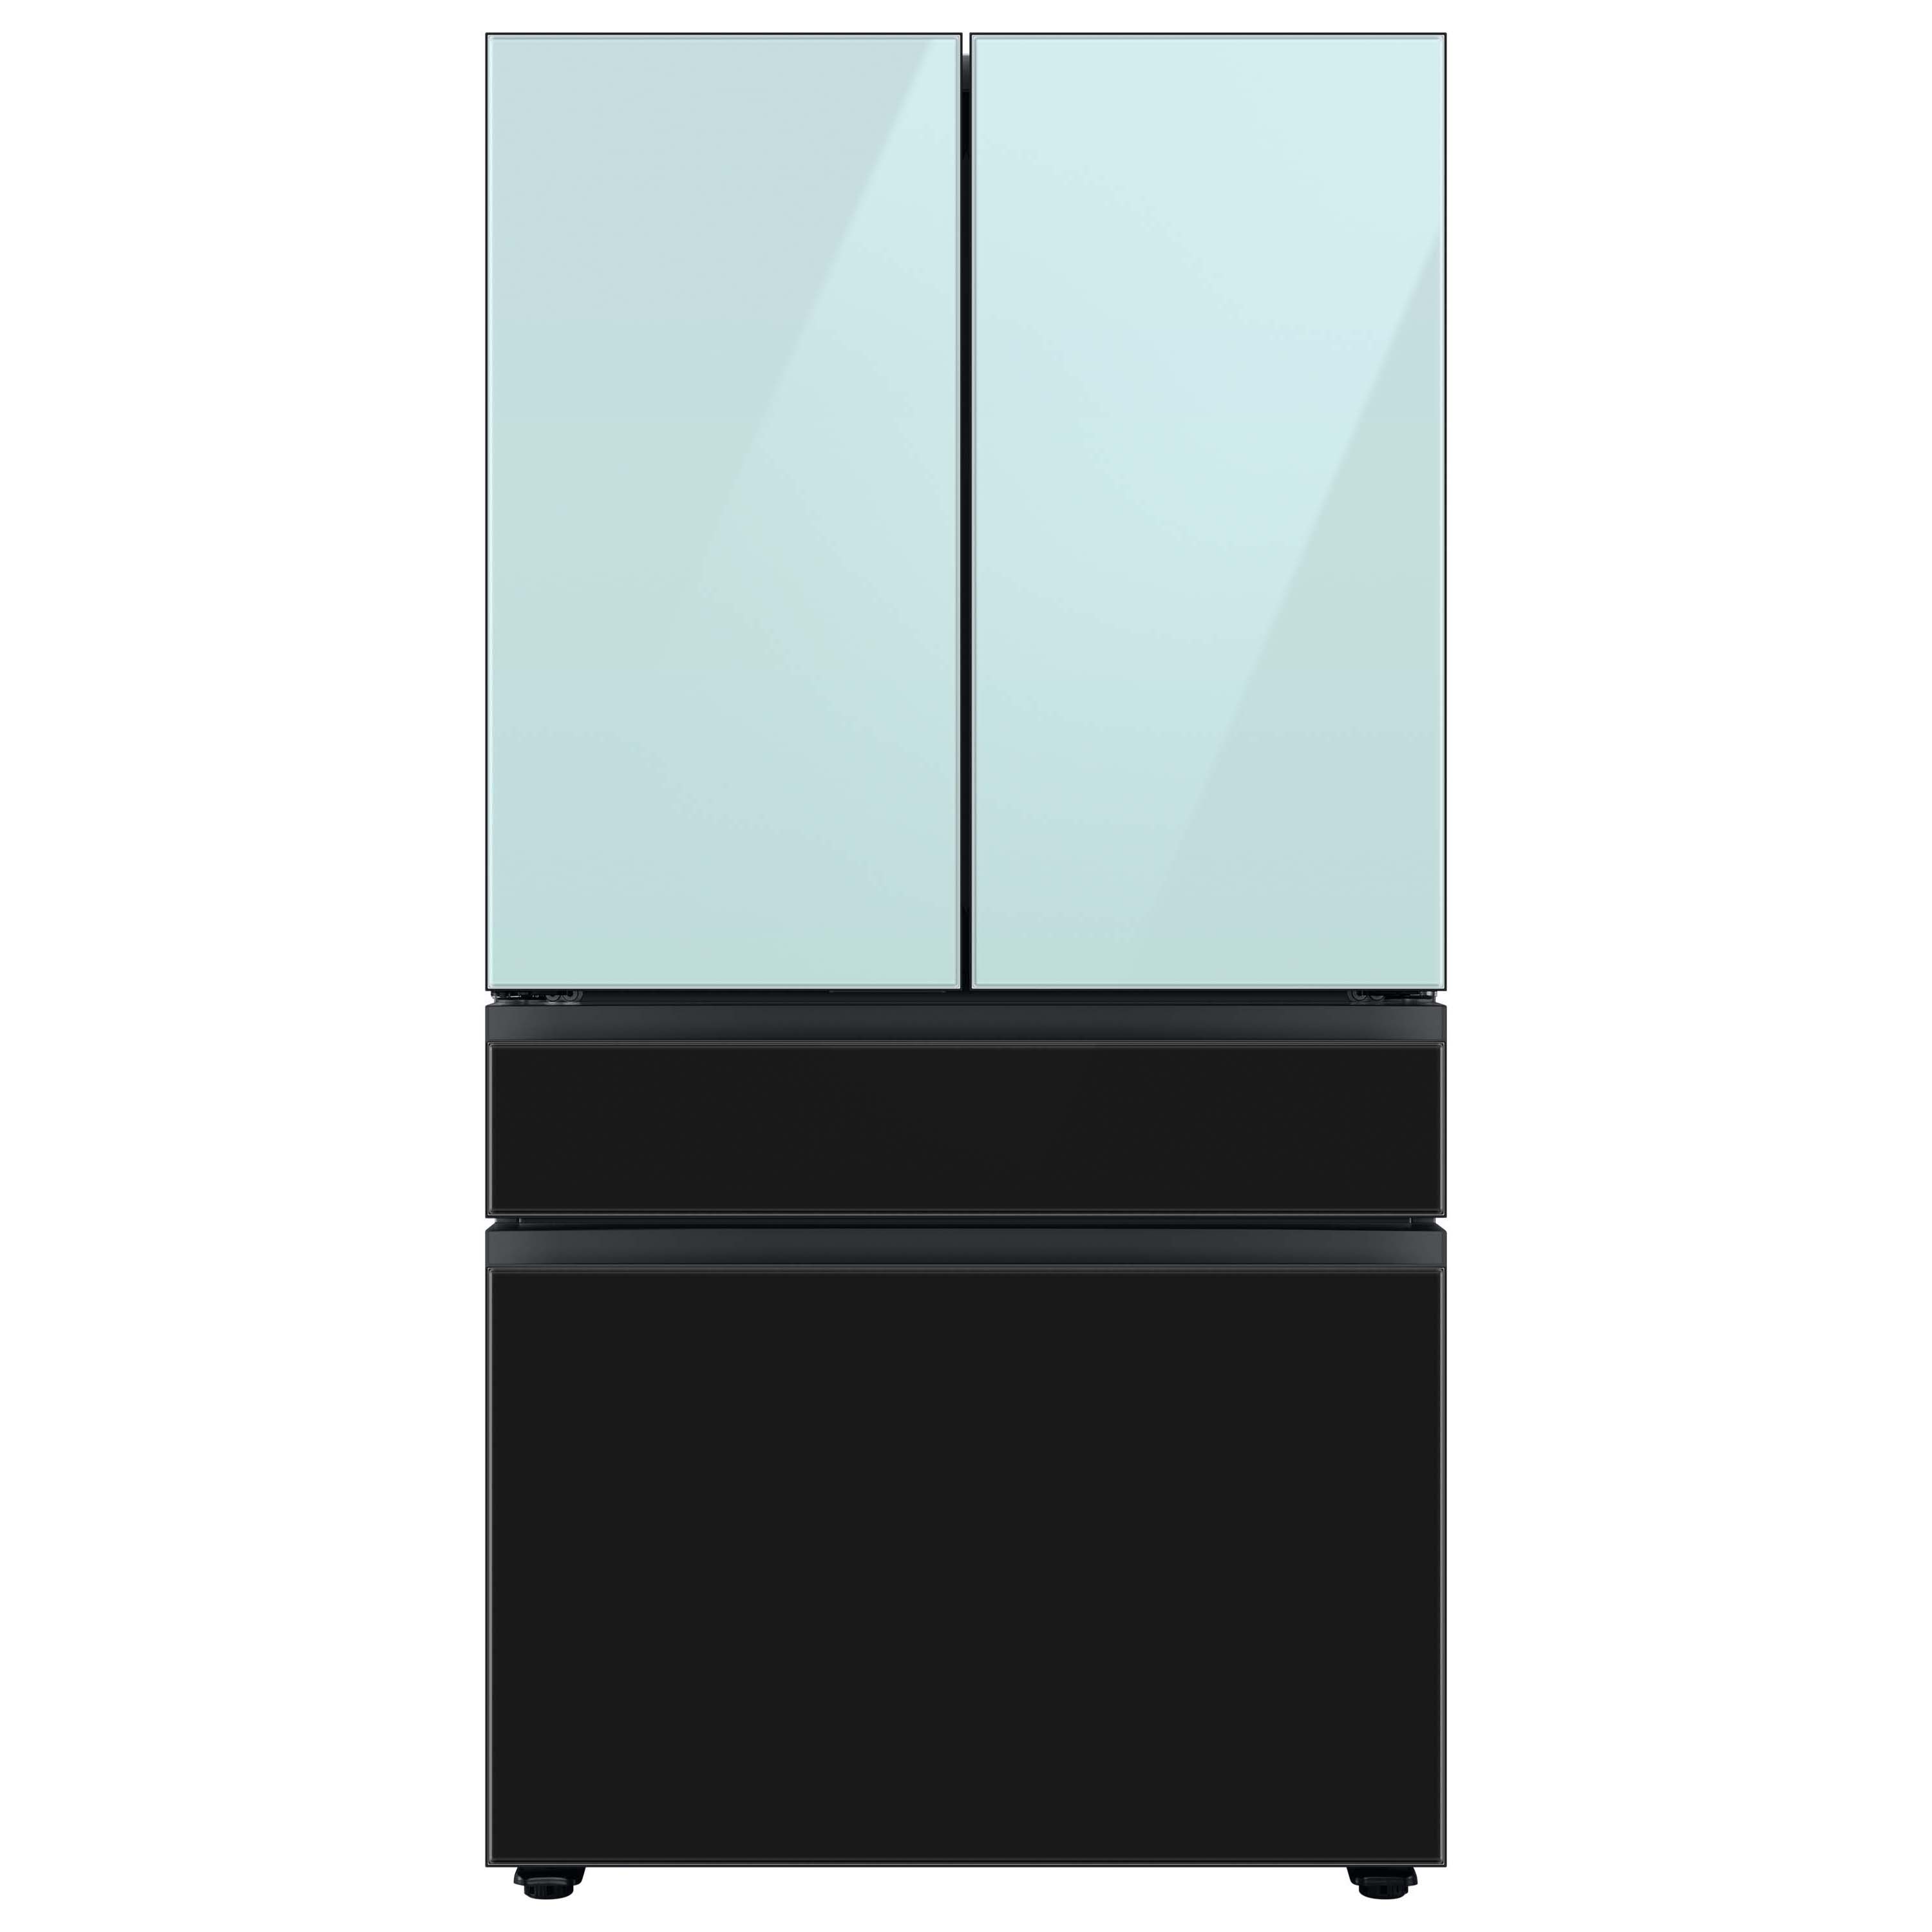 Panel embellecedor puerta inferior frigorifico Whi - Refrigerator Handle -  FERSAY